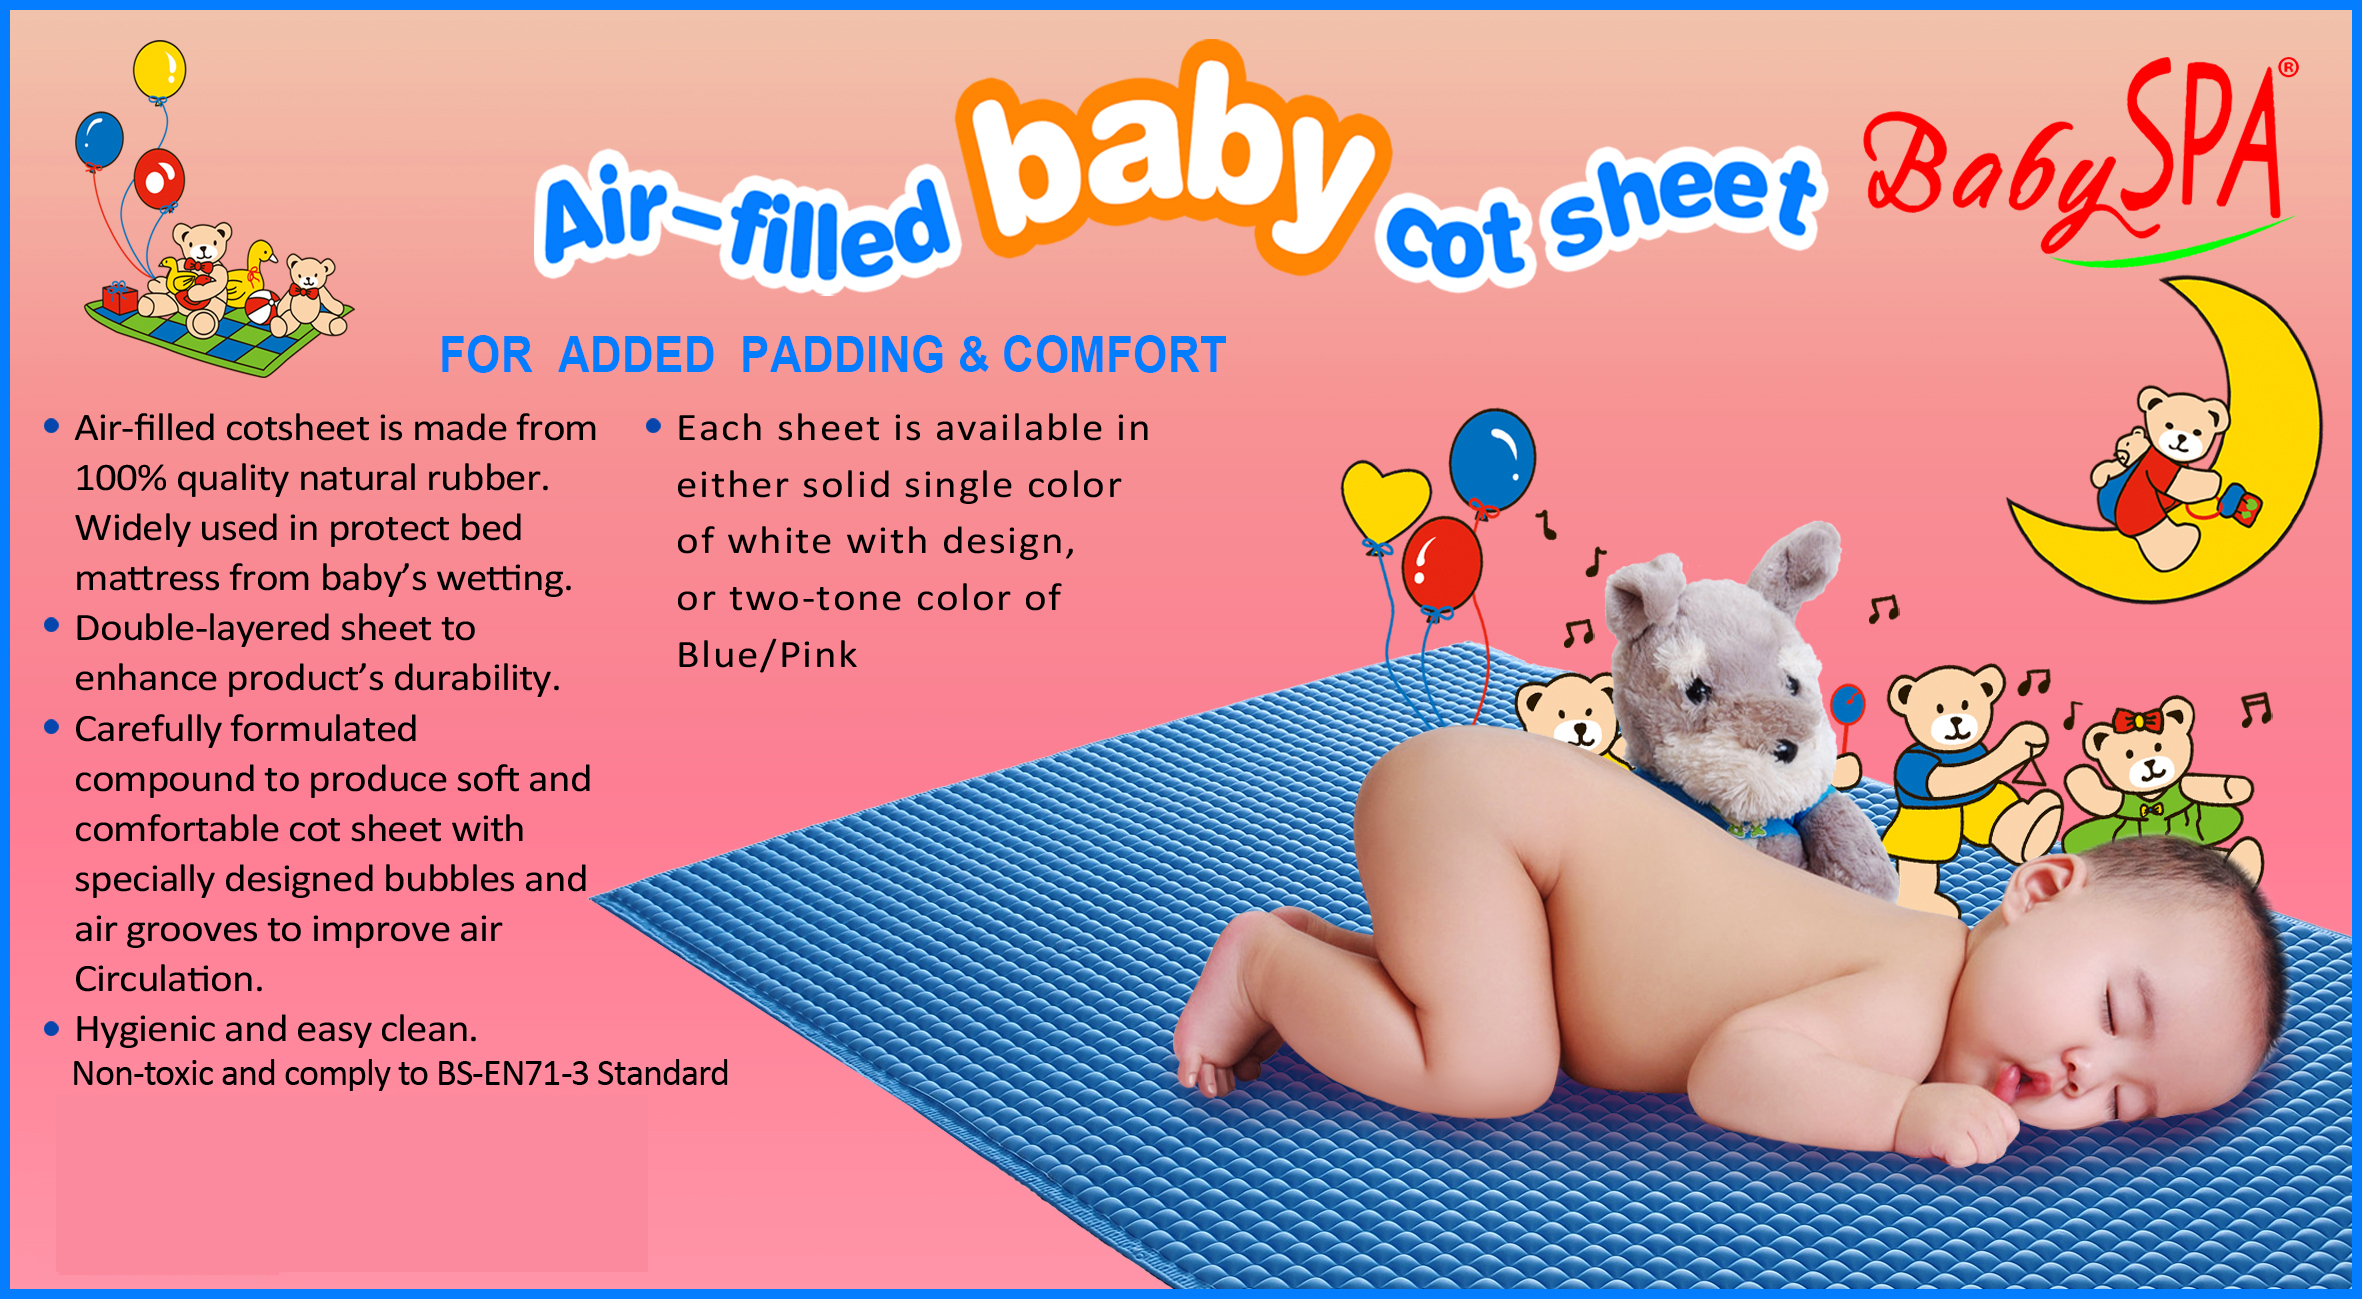 BabySPA Cot Sheet